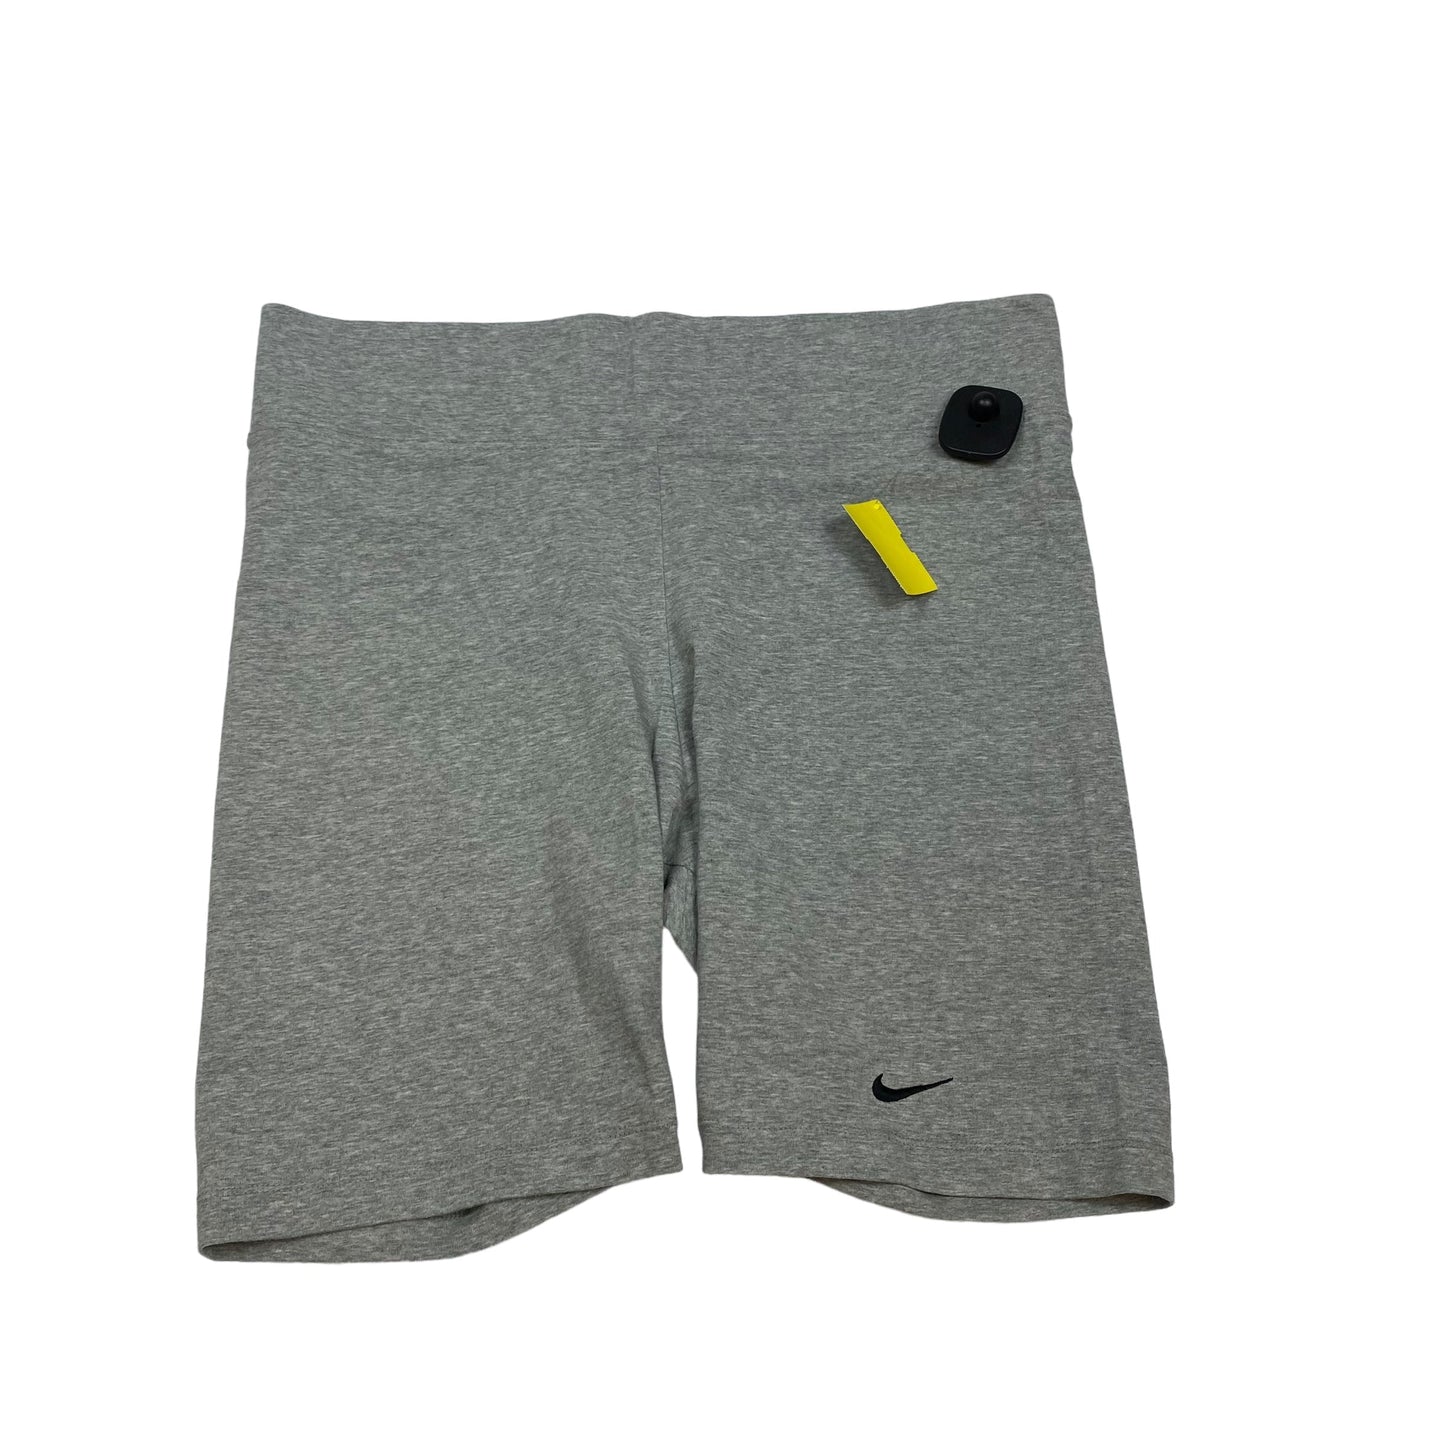 Grey Athletic Shorts Nike Apparel, Size 1x